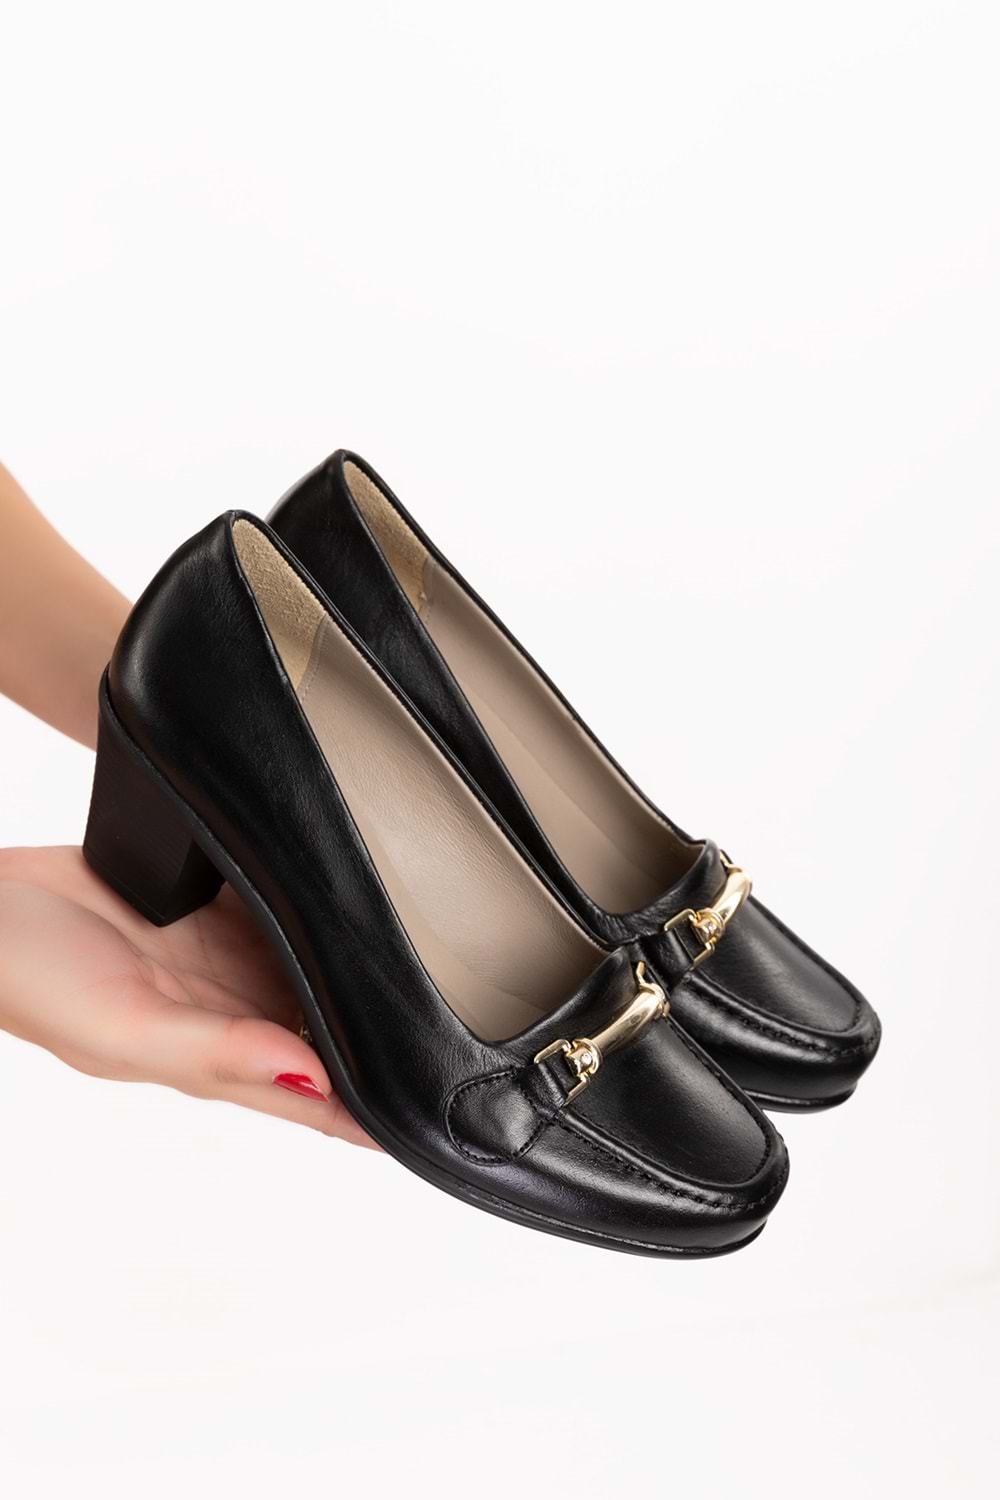 Gondol Hakiki Deri Rahat Klasik Topuklu Ayakkabı vdt.71 - Siyah - 43